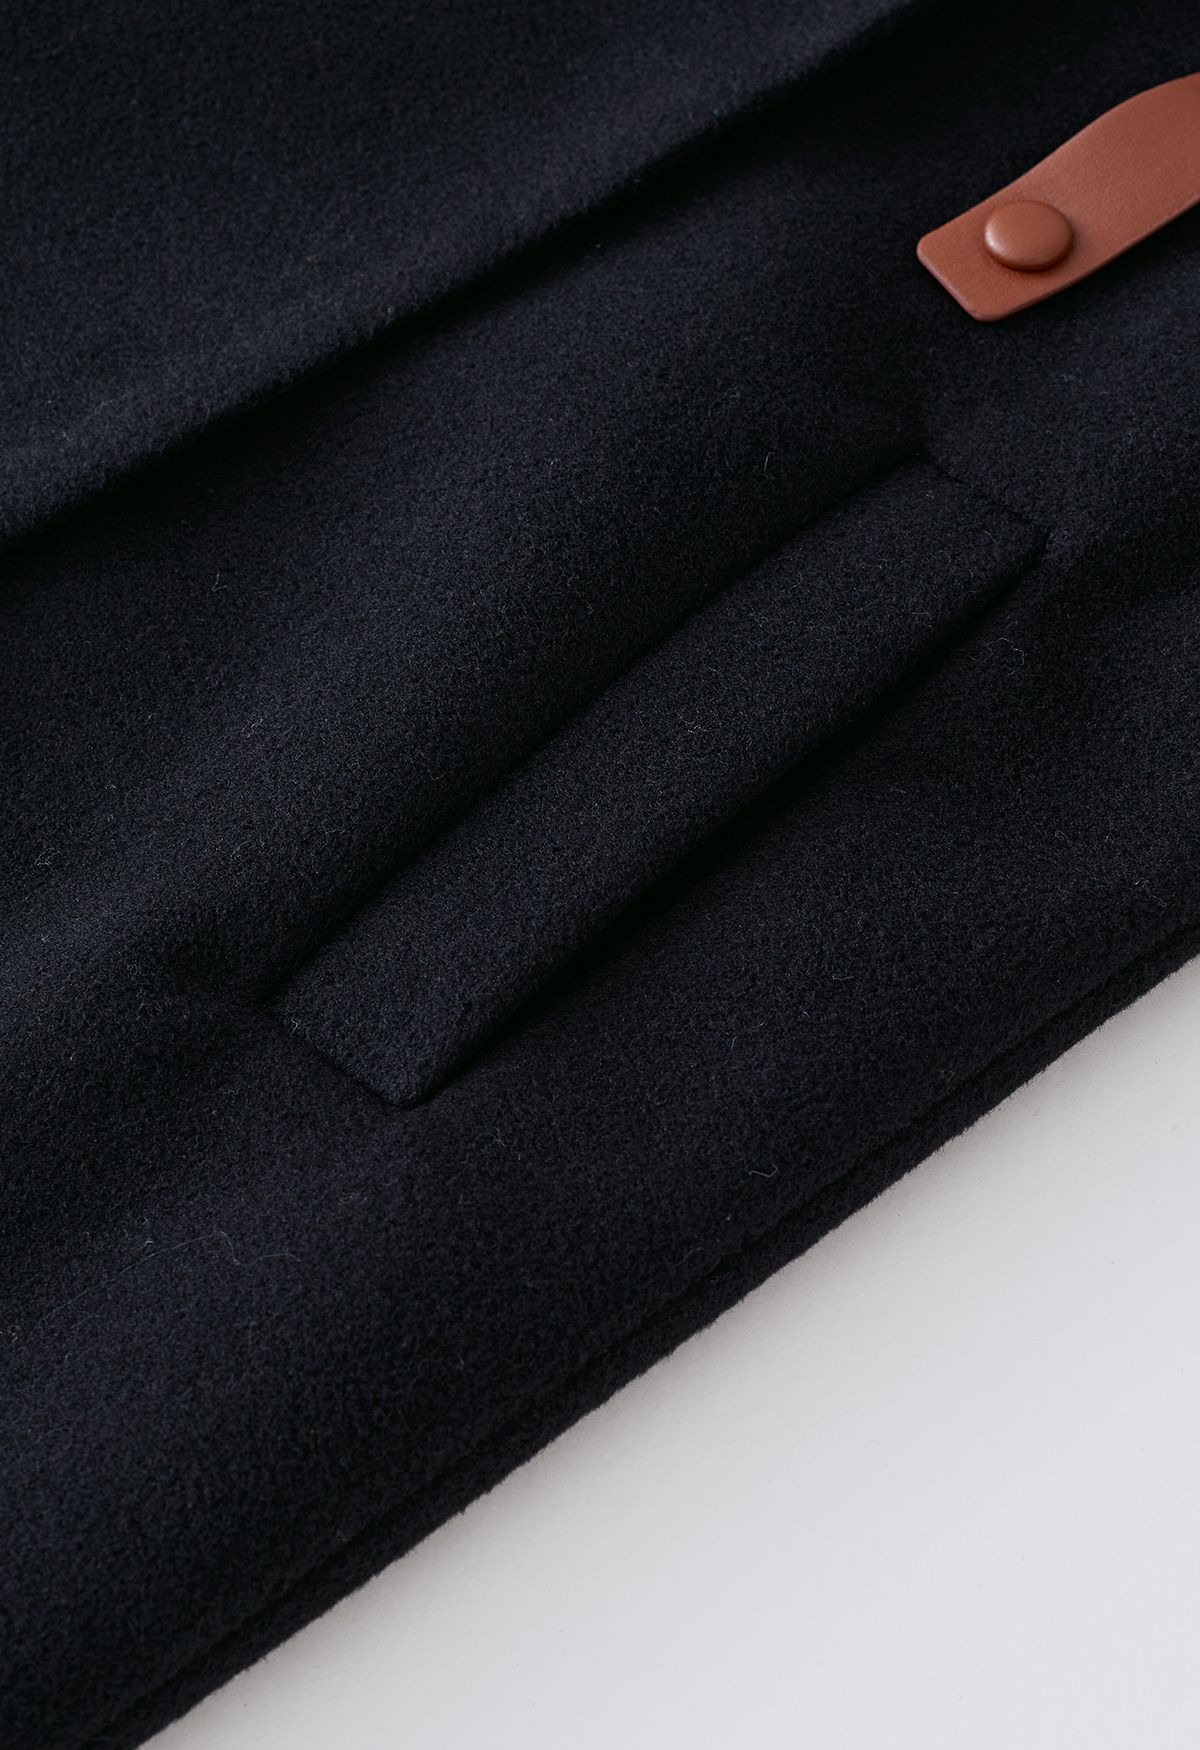 Abrigo largo de mezcla de lana con cinturón en negro